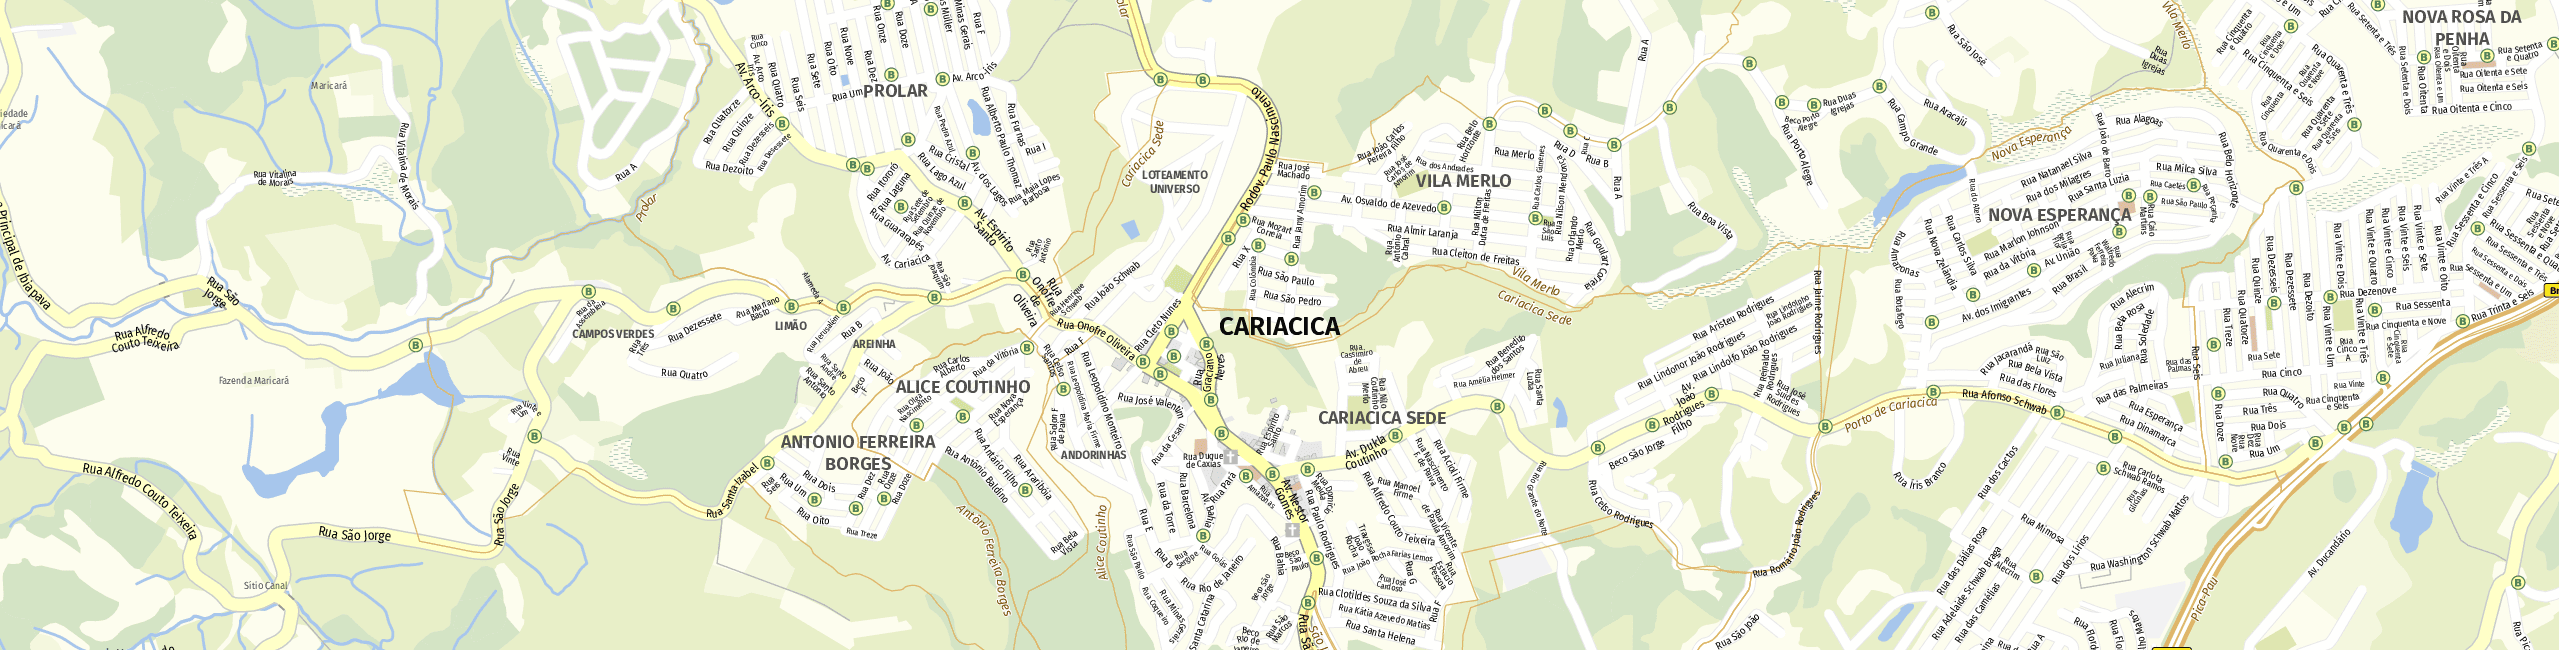 Stadtplan Cariacica zum Downloaden.